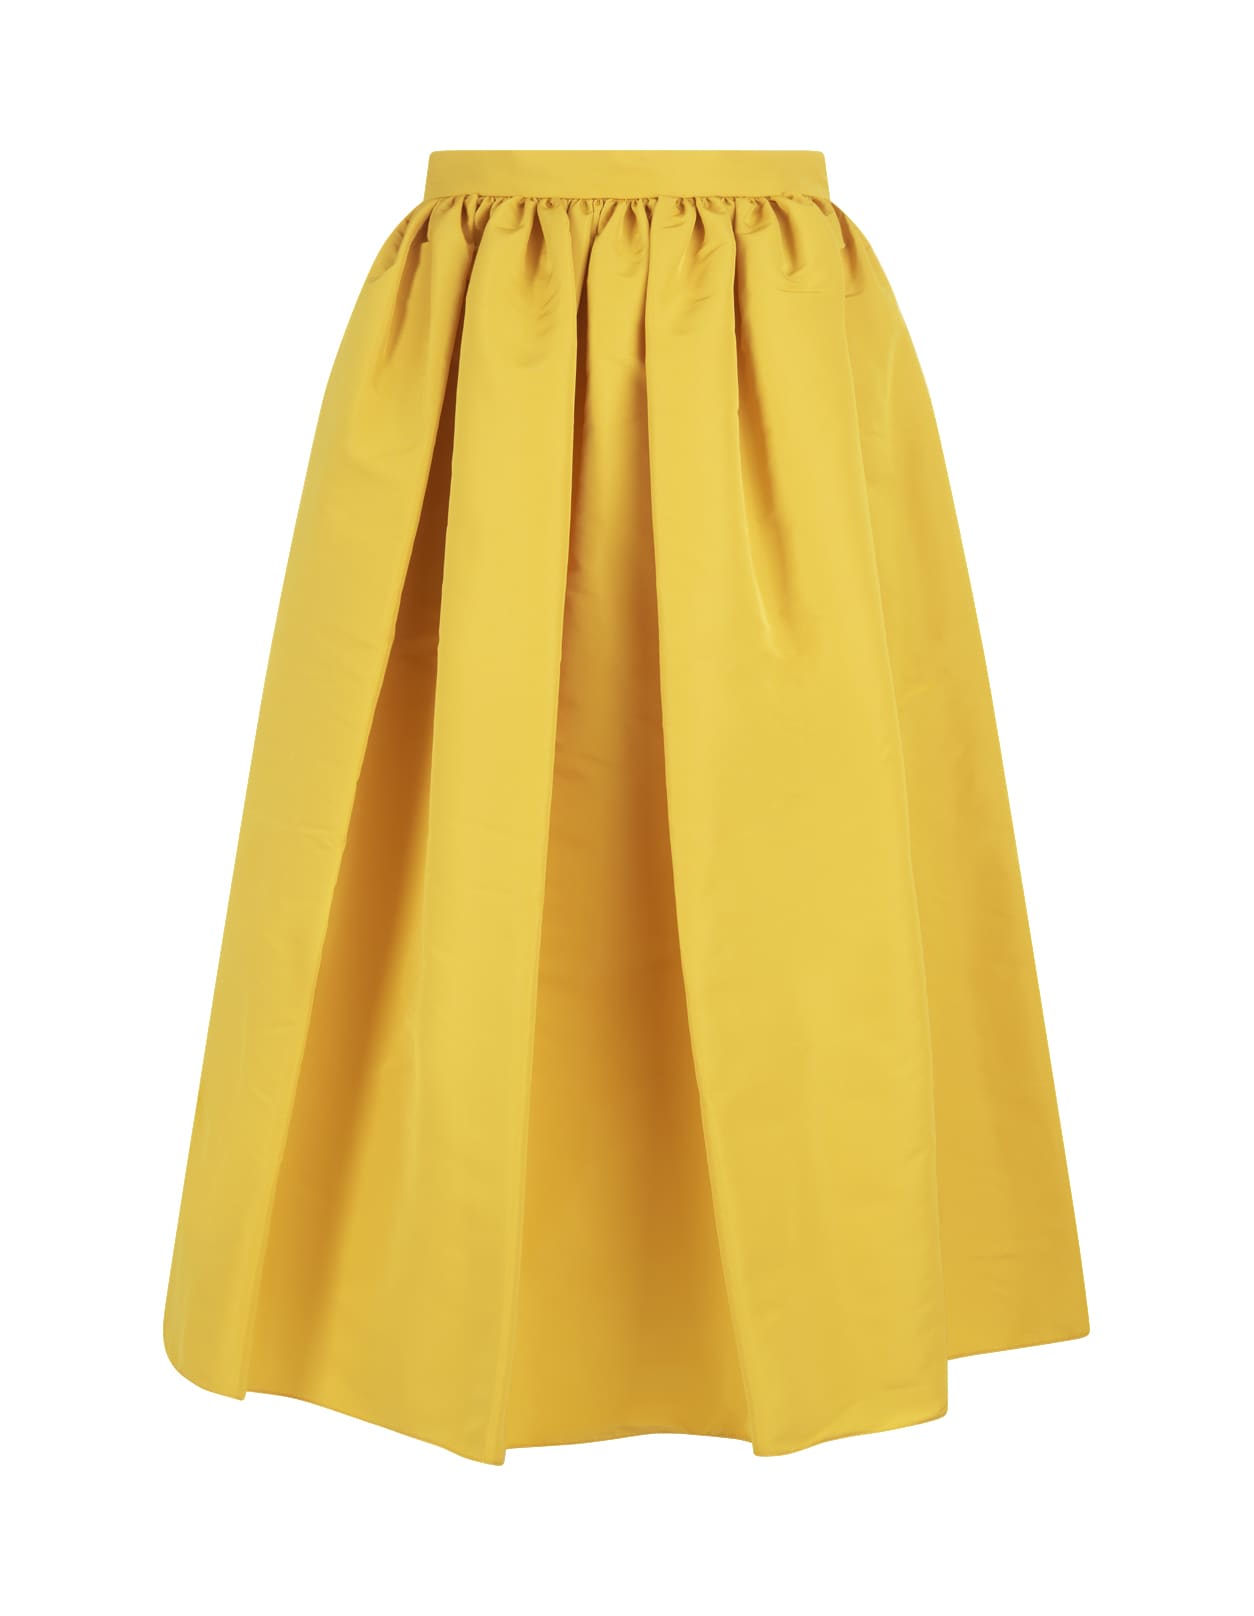 Alexander McQueen Pop Yellow Taffeta Midi Skirt